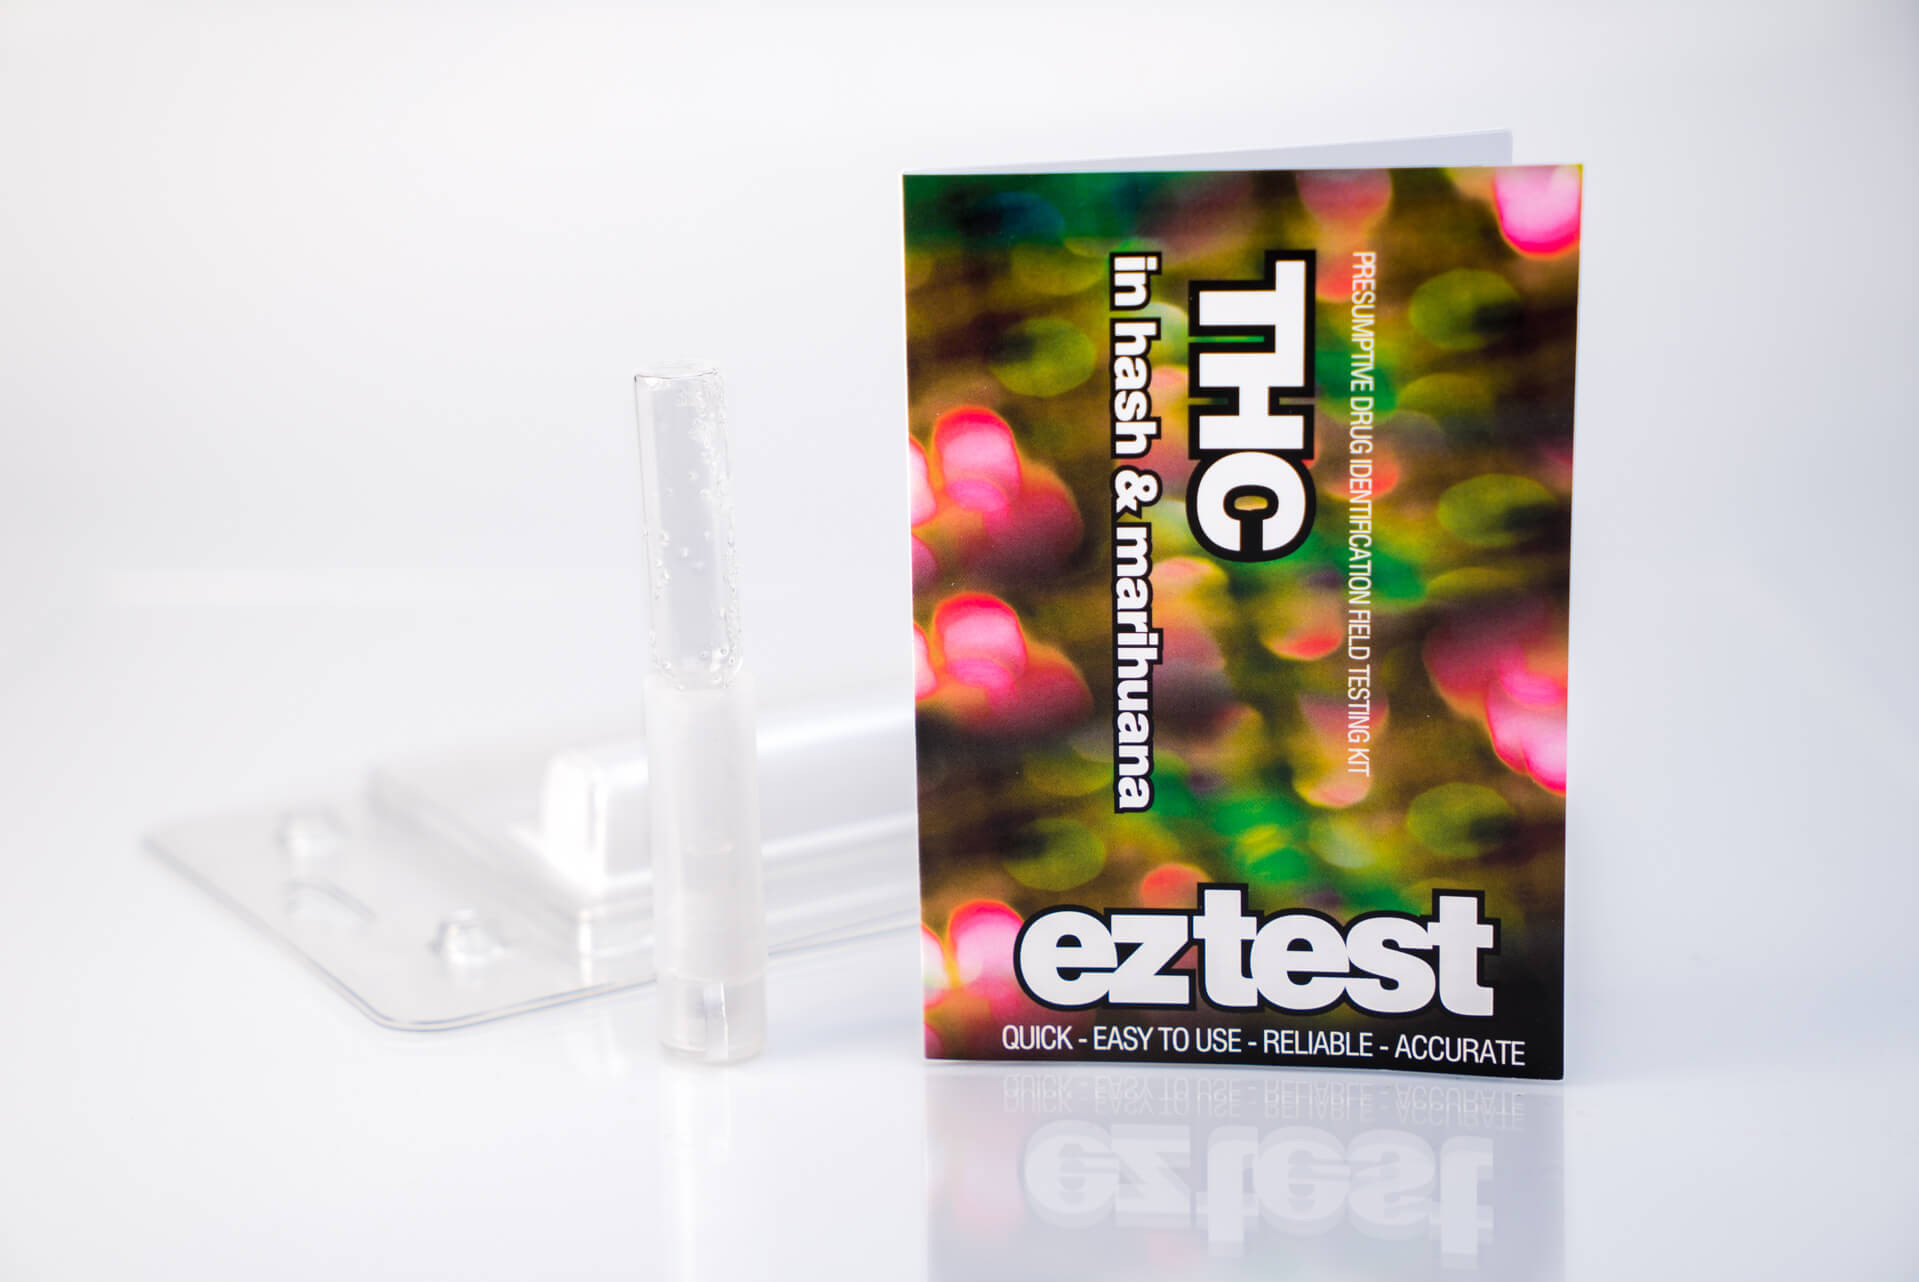 THC Single Use Drug Testing Kit - Home Drug Testing Kits 